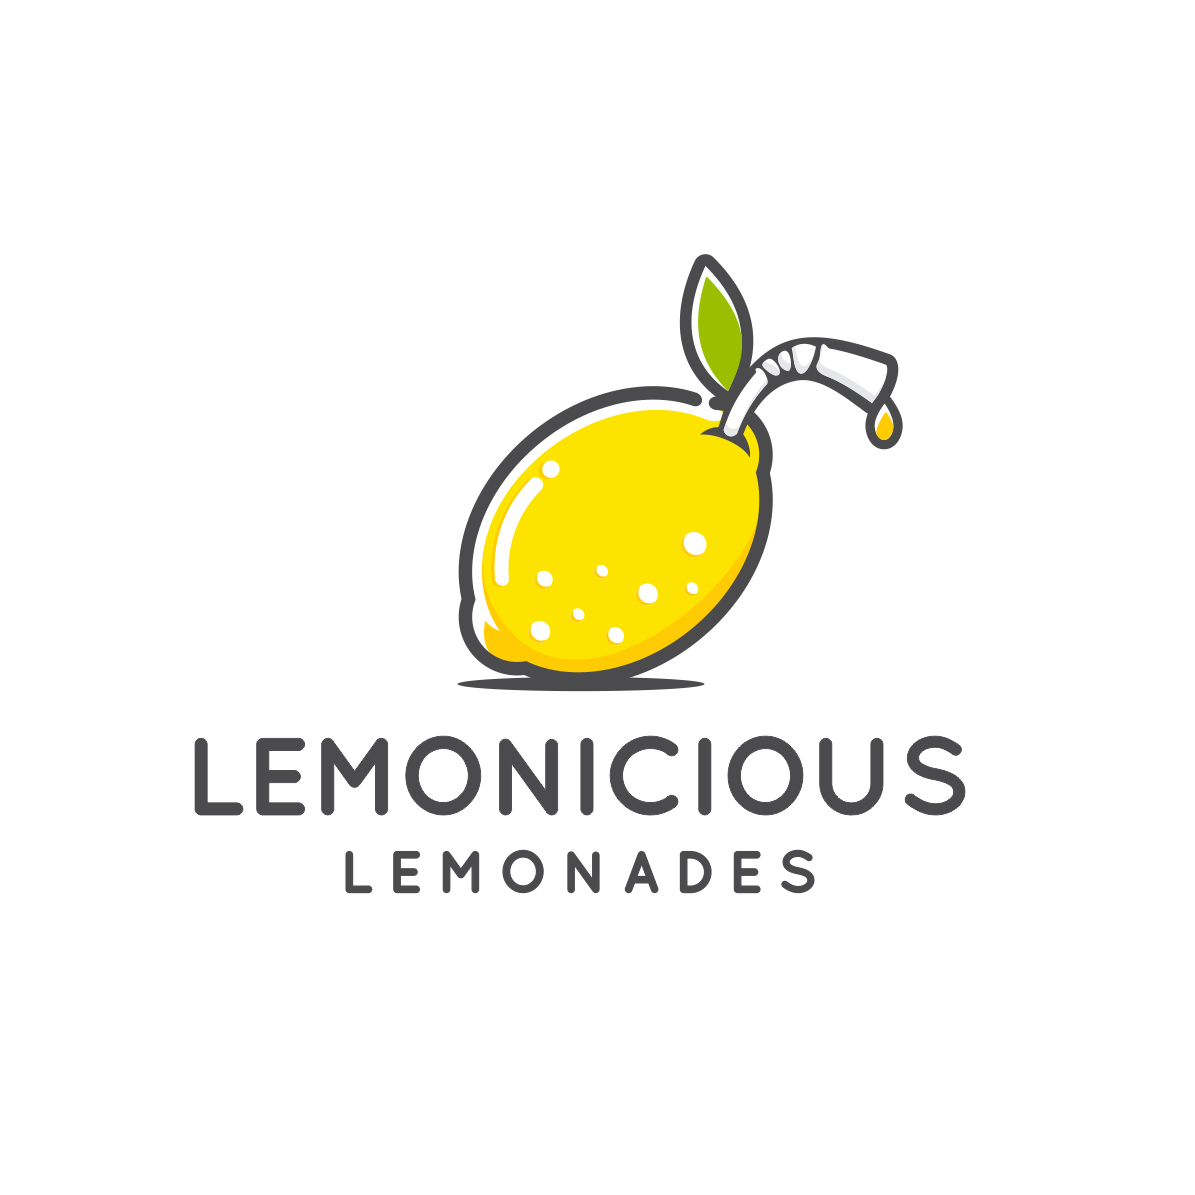 Lemons Clipart Hd PNG, Lemon Logo Vector Design Icon, Logo Icons, Lemon  Icons, Fruit PNG Image For Free Download